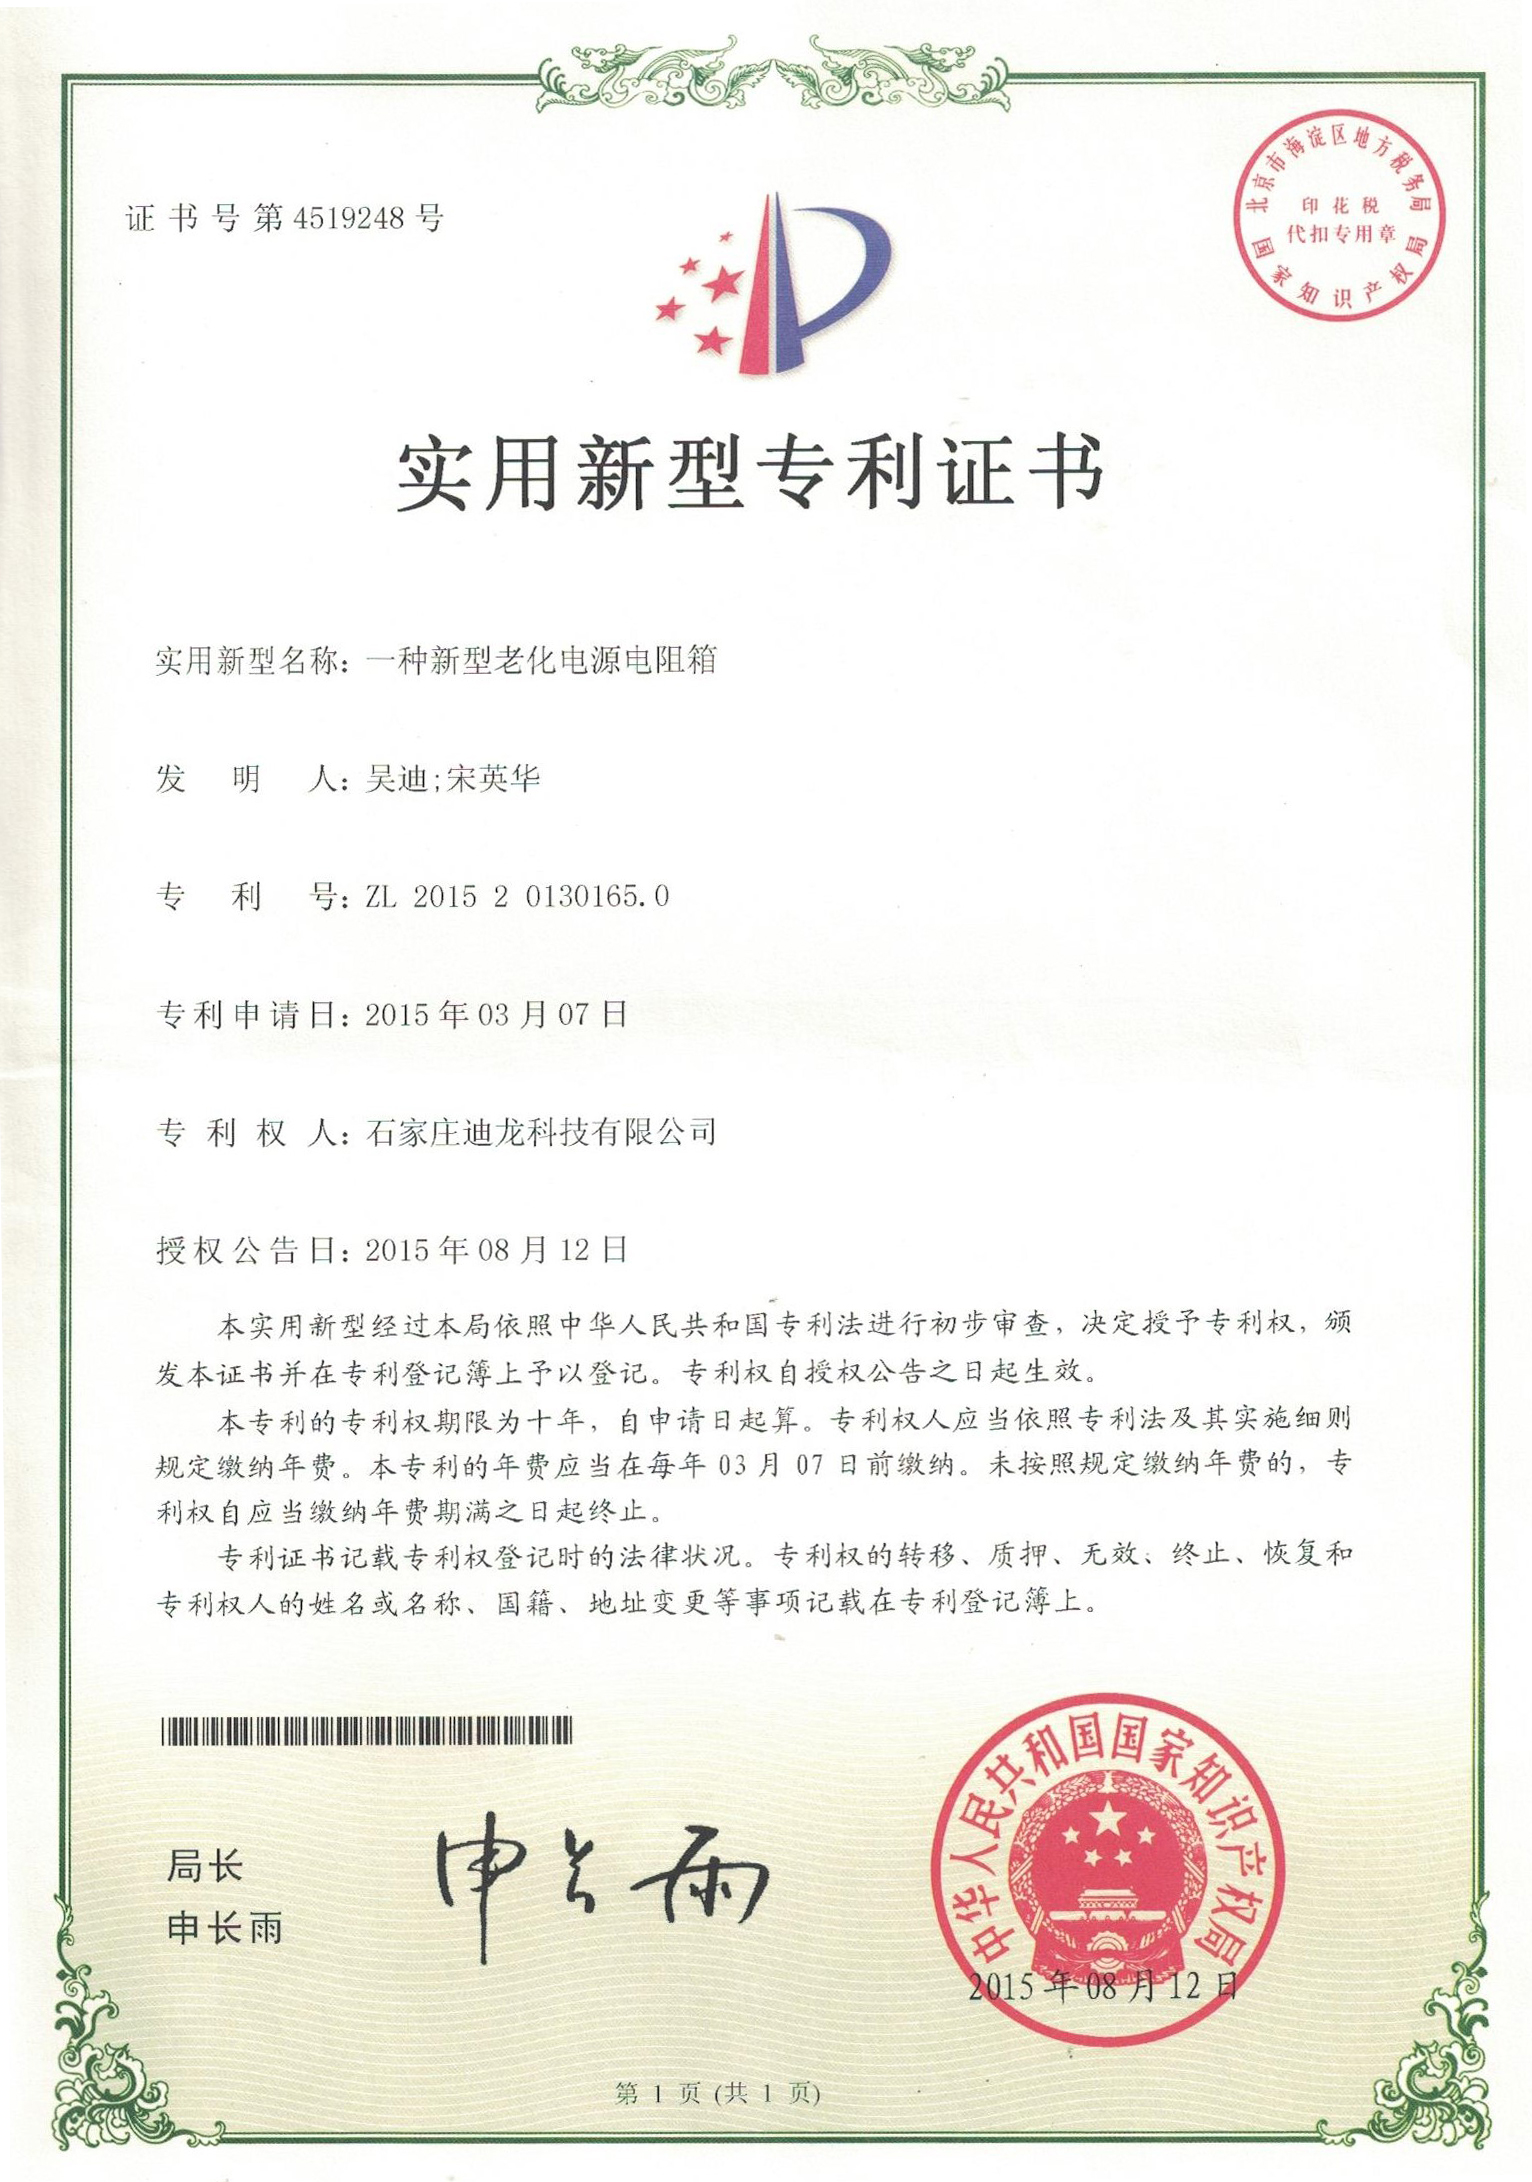 “New patent certificate